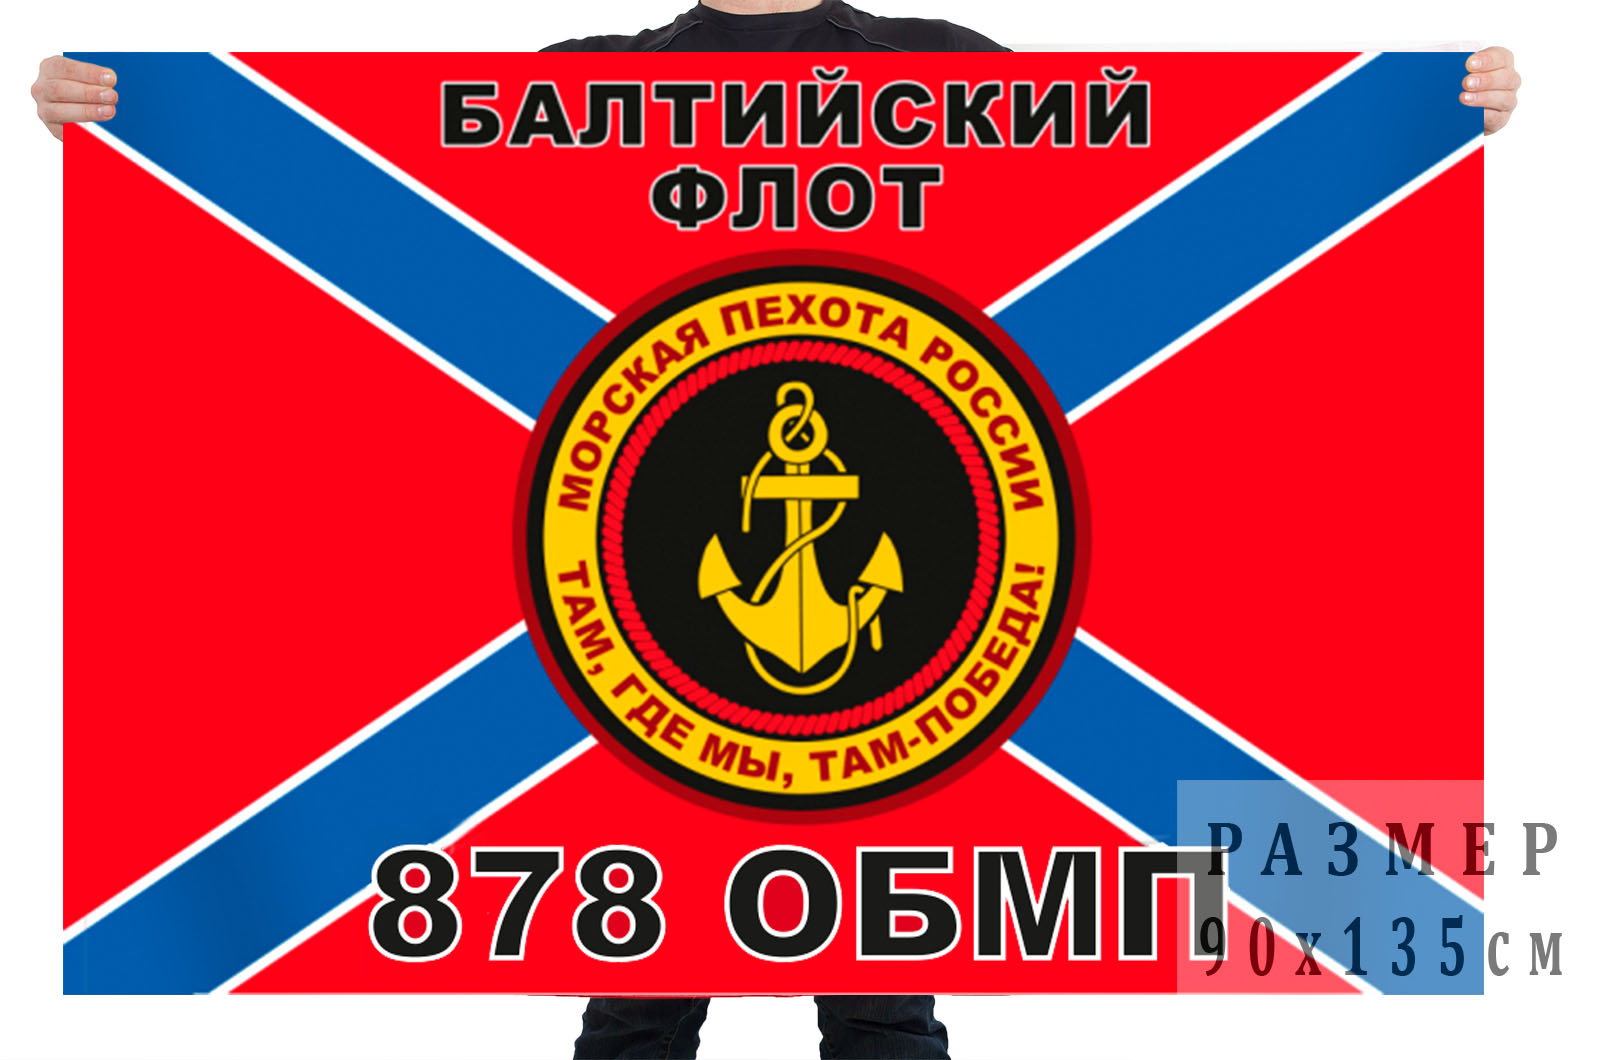 Флаг Морской пехоты 878 ОБМП Балтийский флот